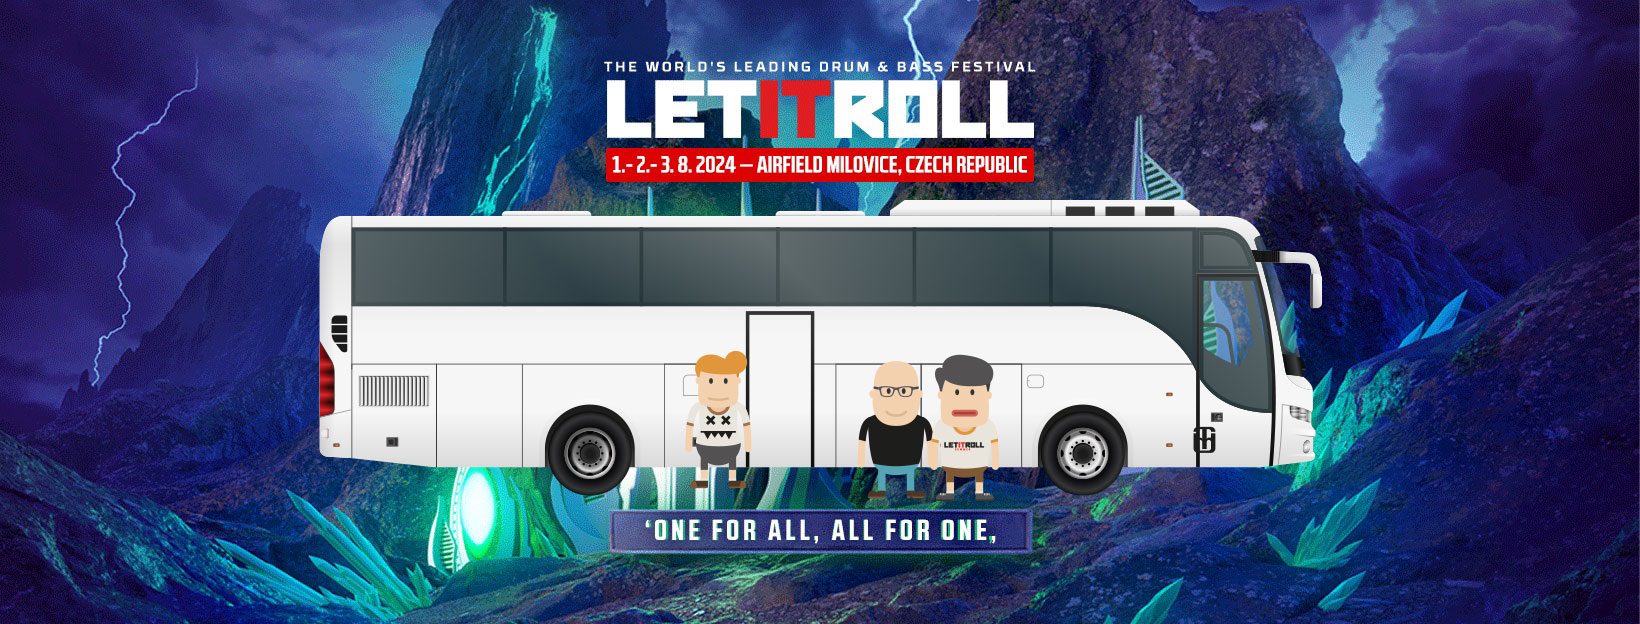 let-it-roll-summer-2024-bustour-banner